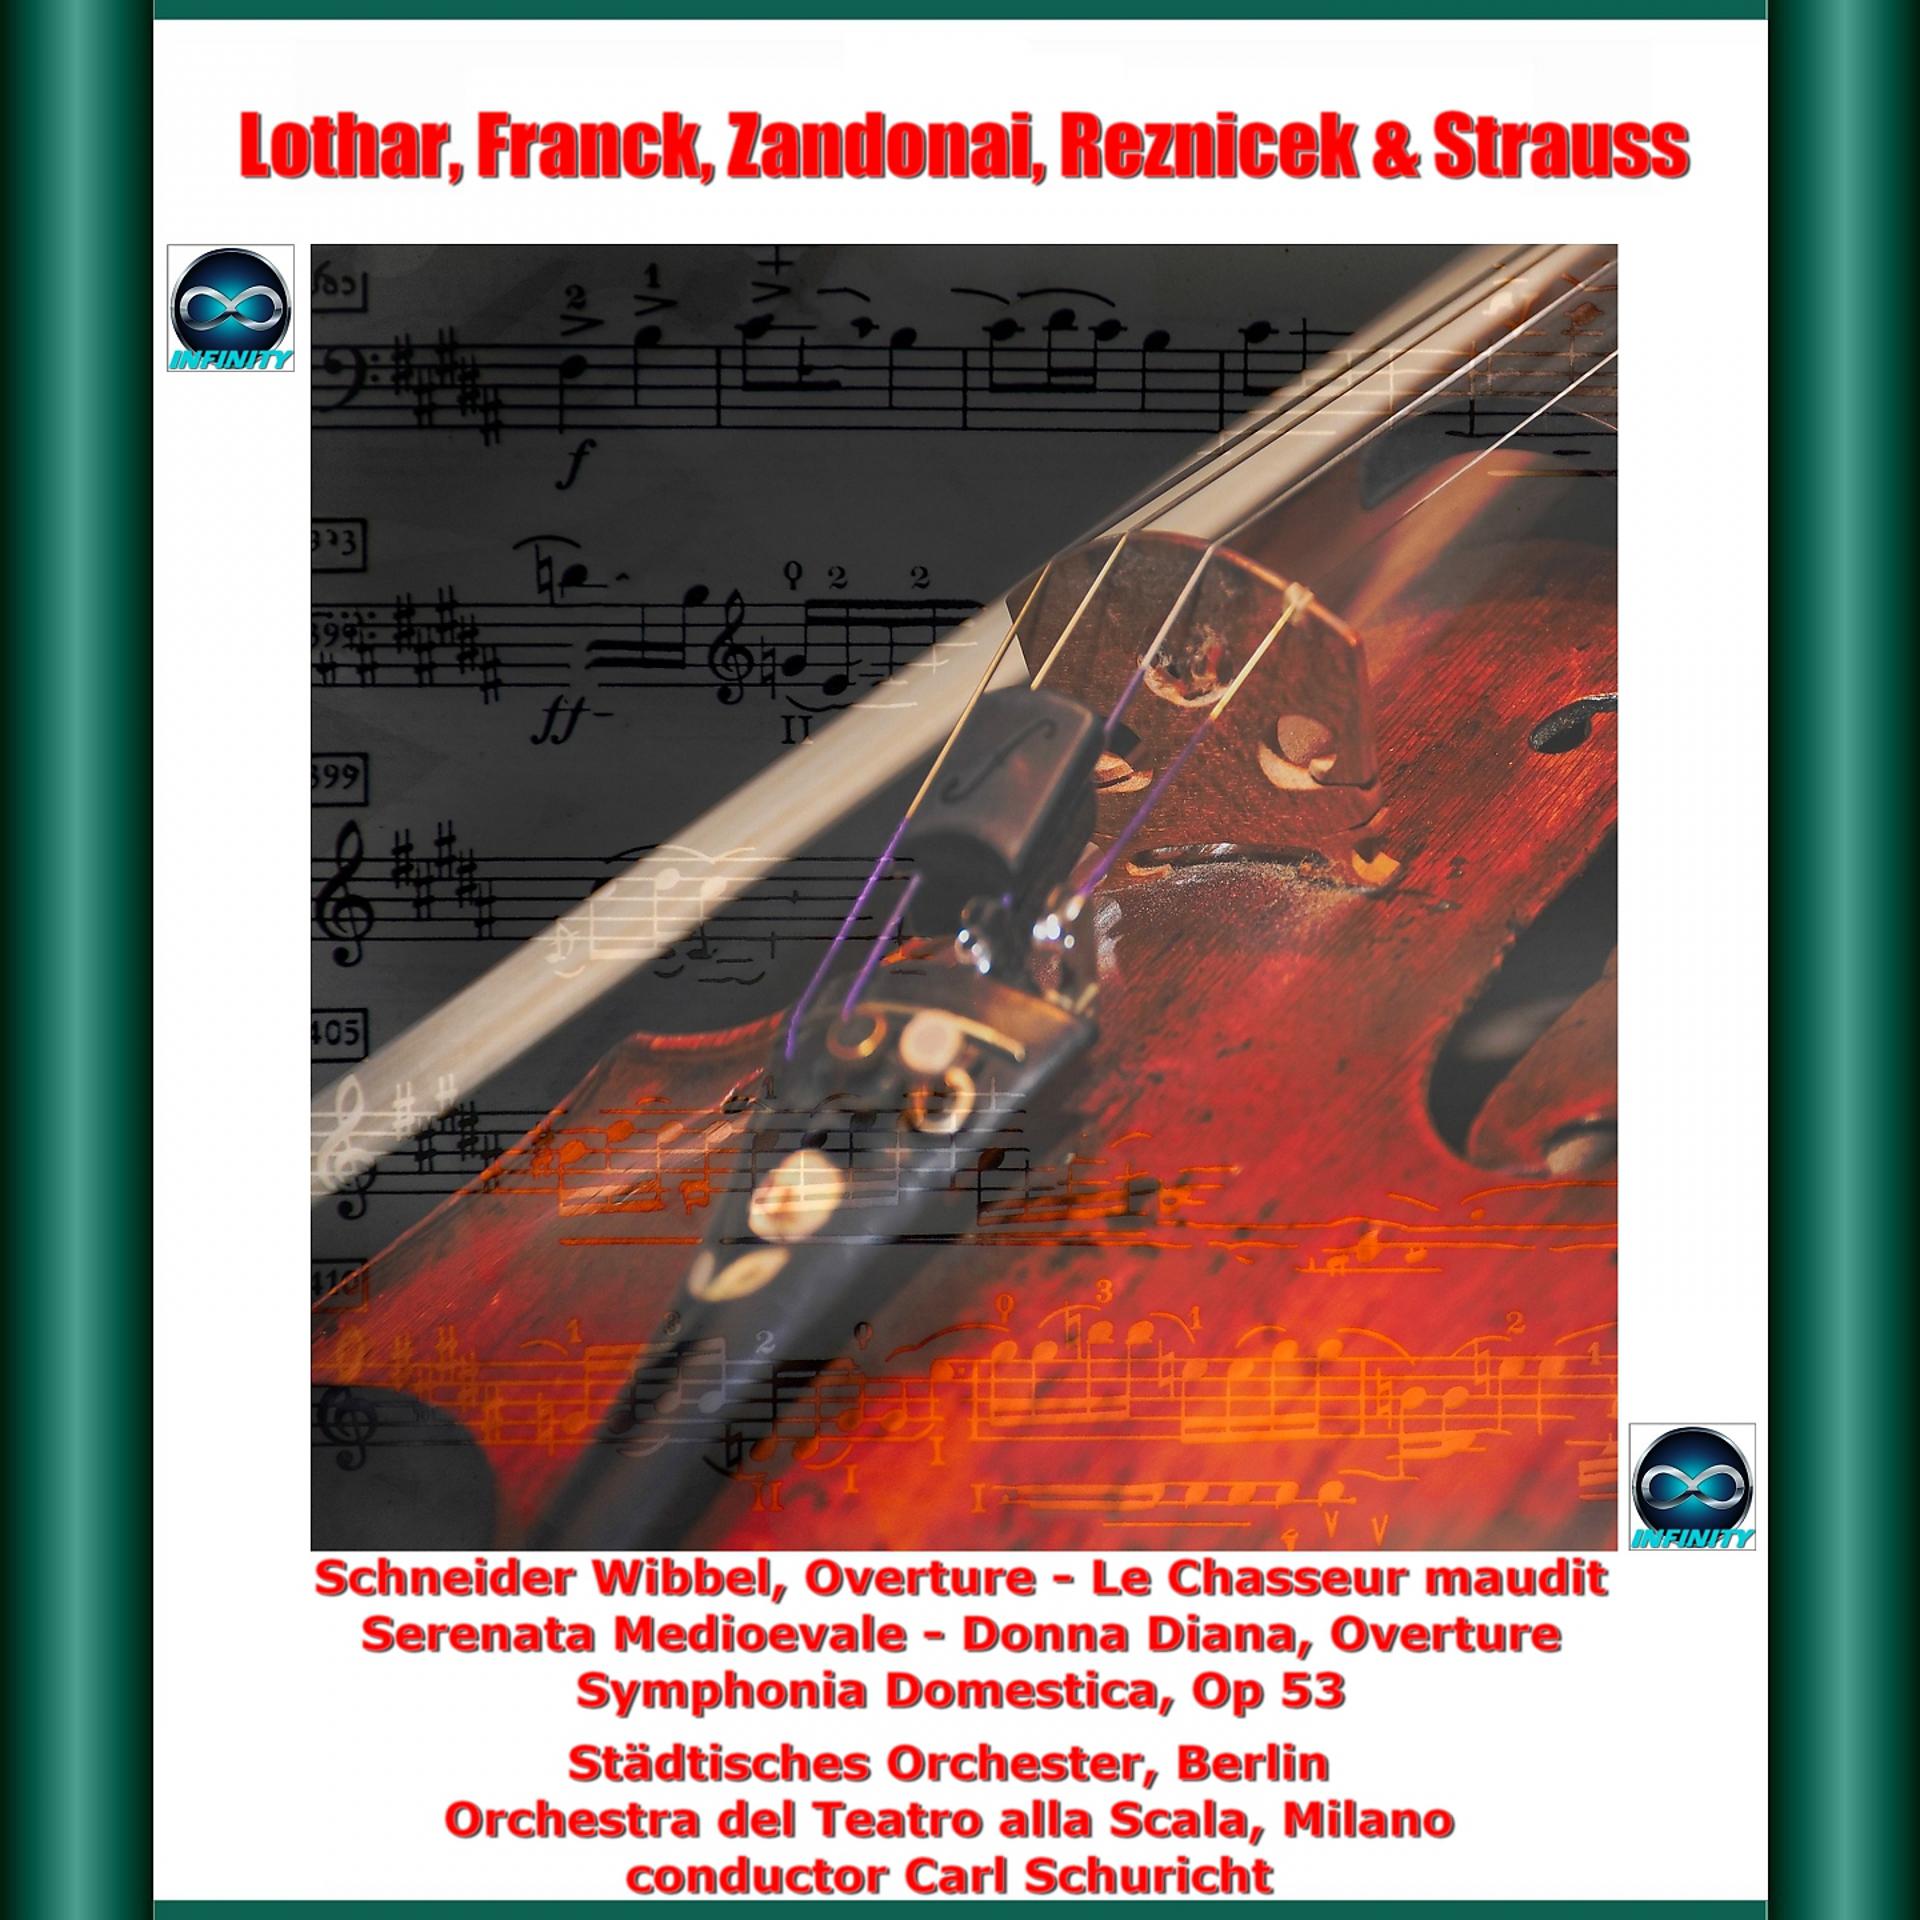 Постер альбома Lothar, franck, zandonai, rezniček & strauss: Schneider wibbel, overture - le chasseur maudit - serenata medioevale - donna diana, overture - symphonia domestica, op 53